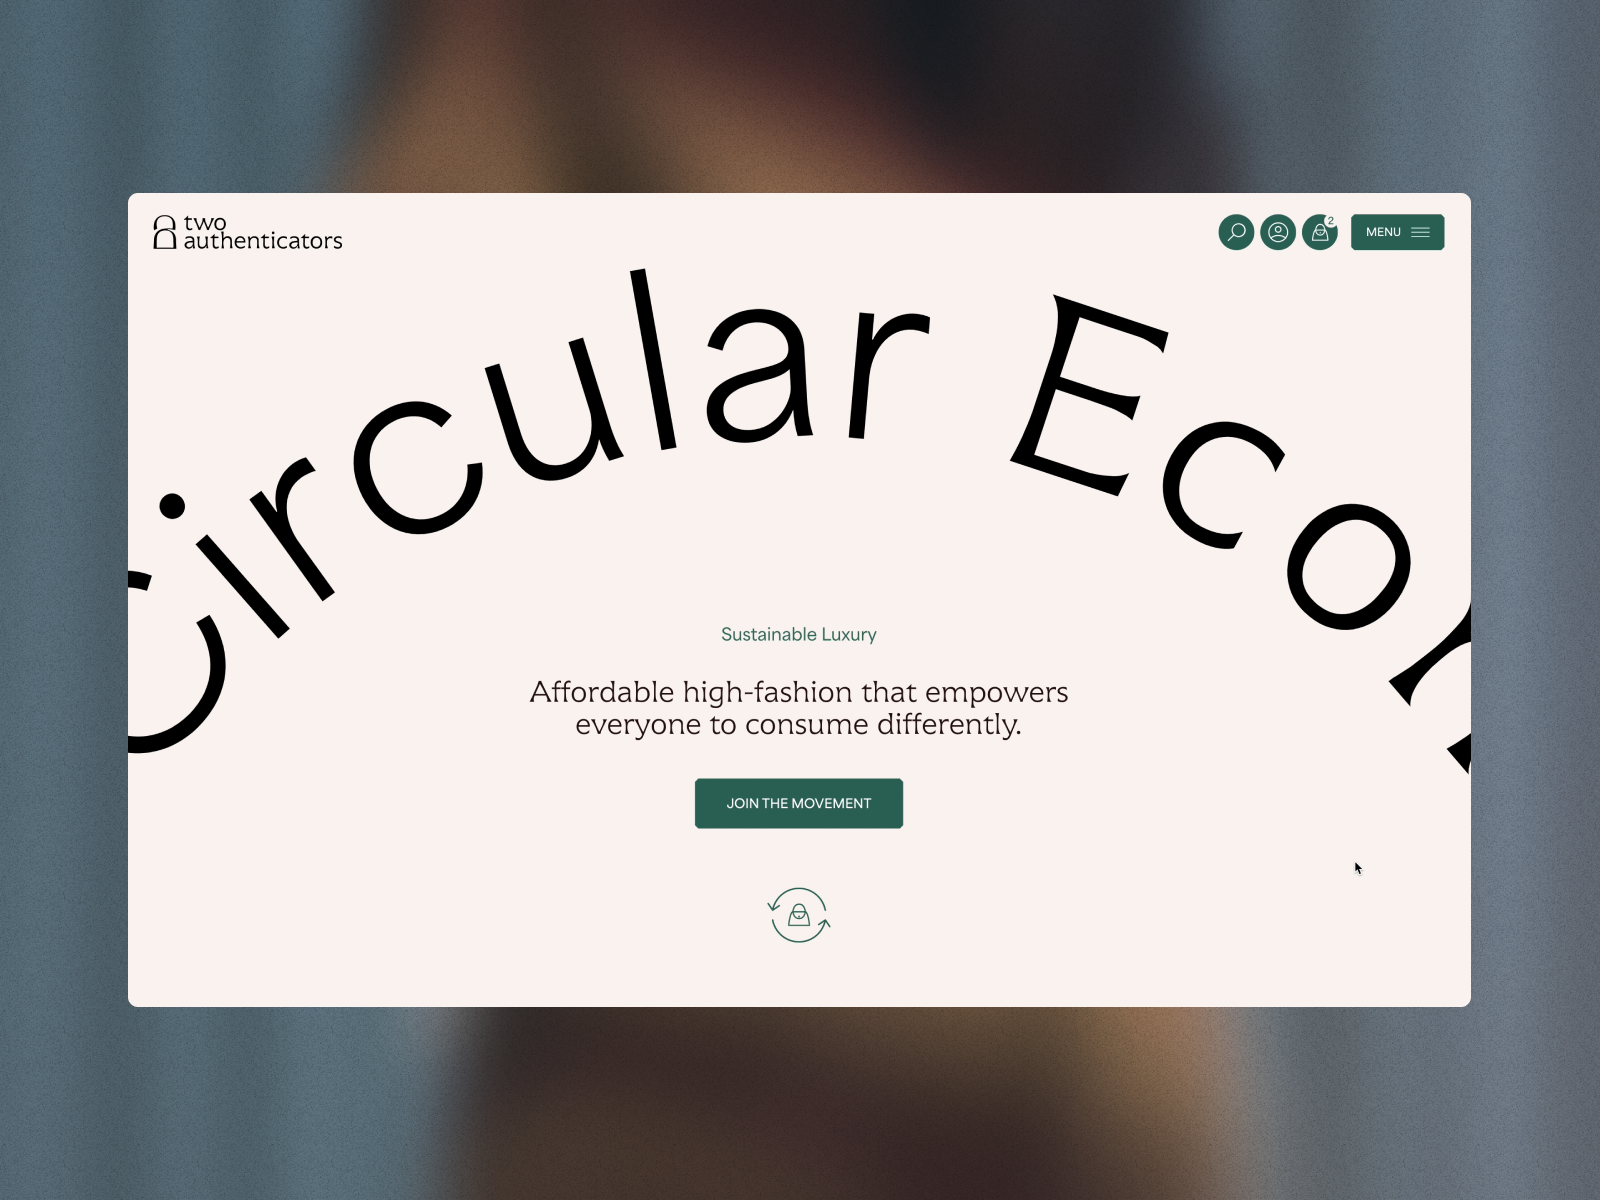 Rotating text - Circular Economy